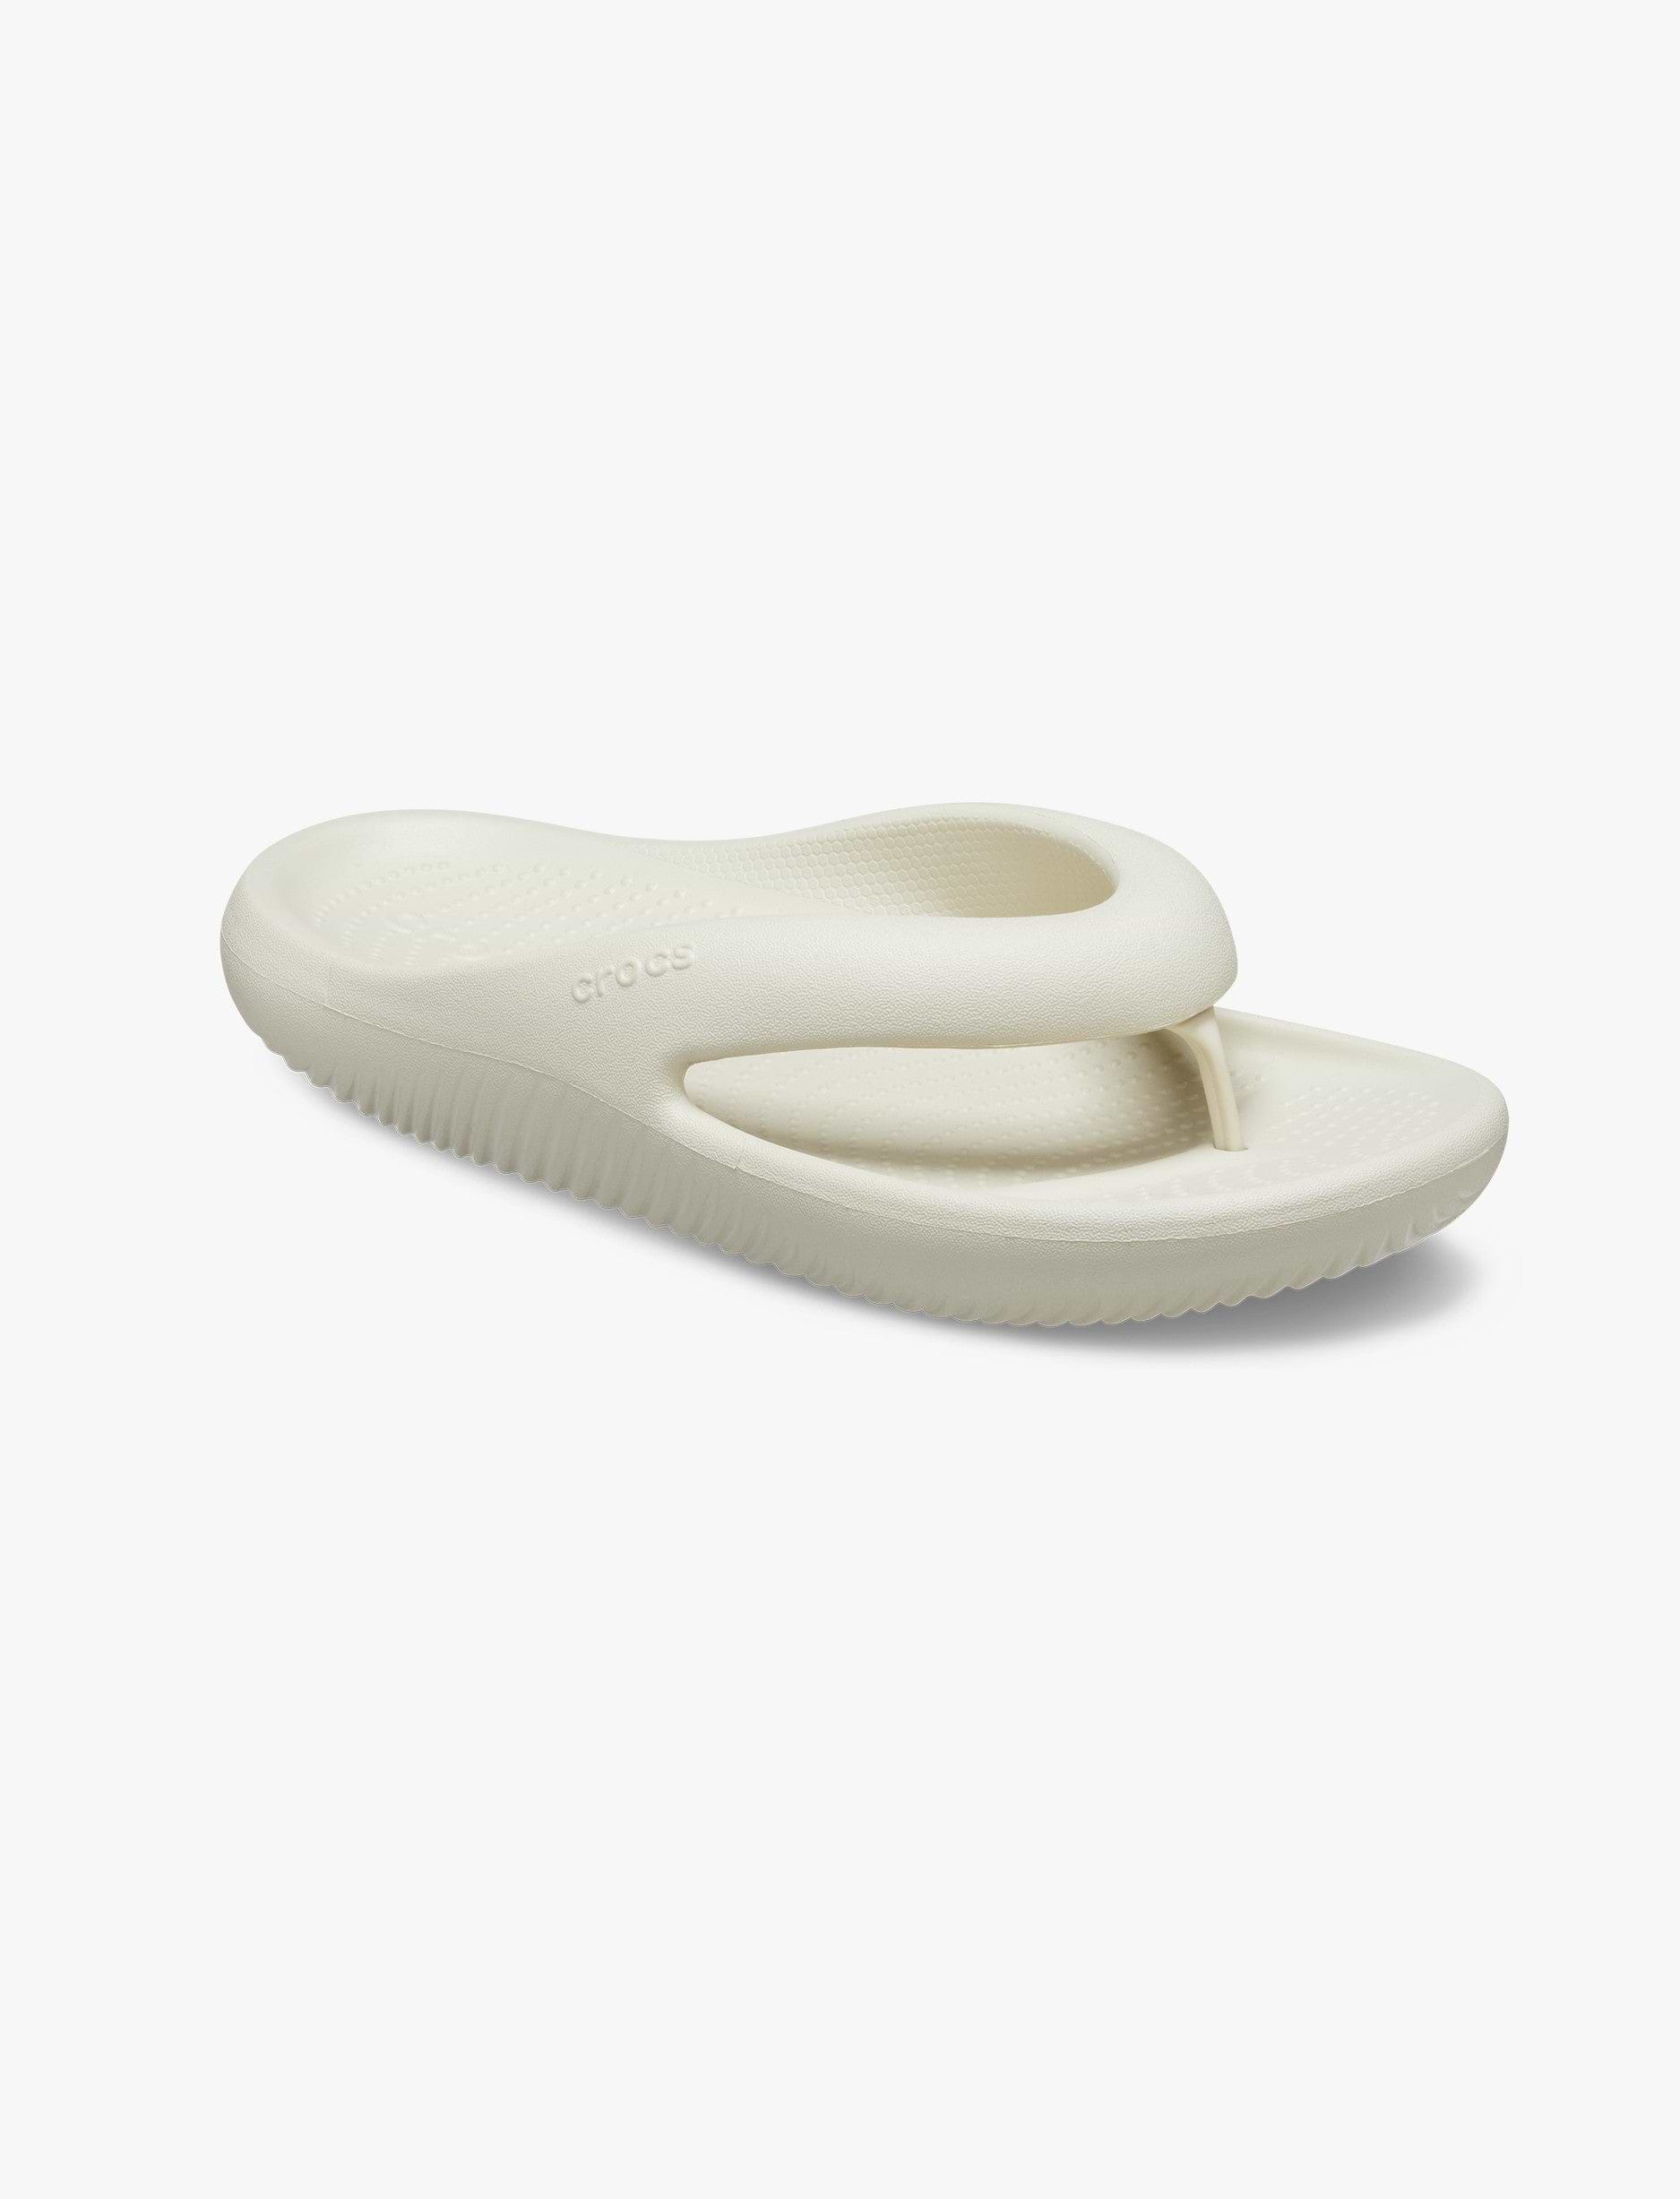 Crocs Mellow Flip - כפכפי אצבע קרוקס לנשים דגם מילו